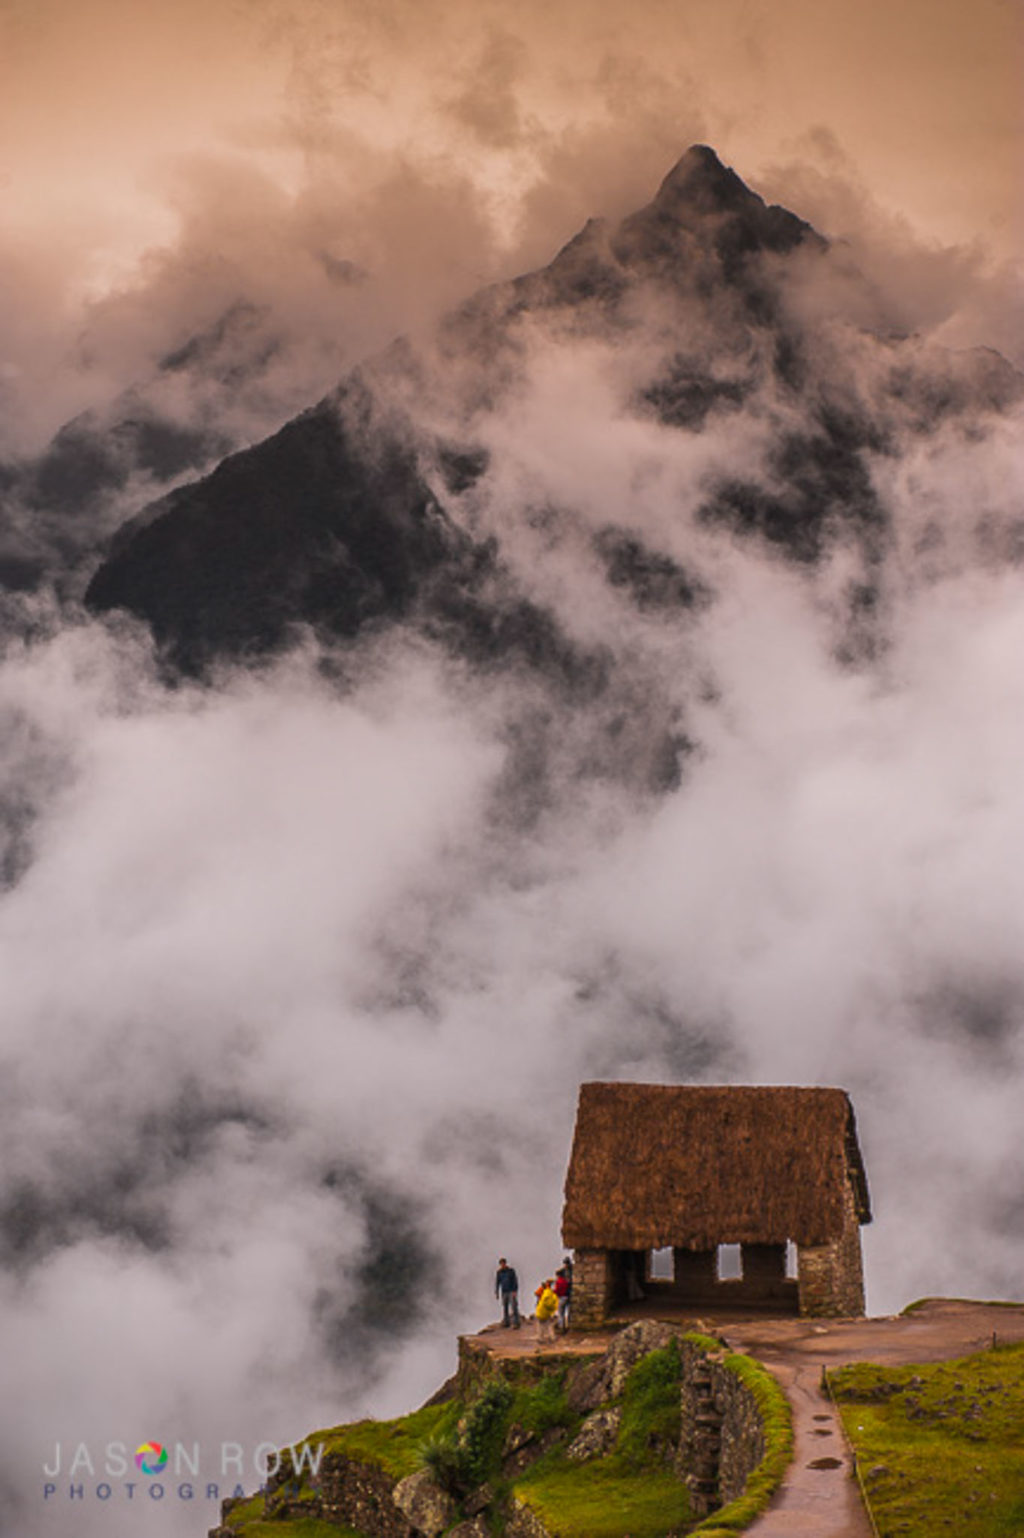 Clouds rise around and over the gatekeepers hut in Machu Picchu, Peru. The Peruvian highlands rise in the background